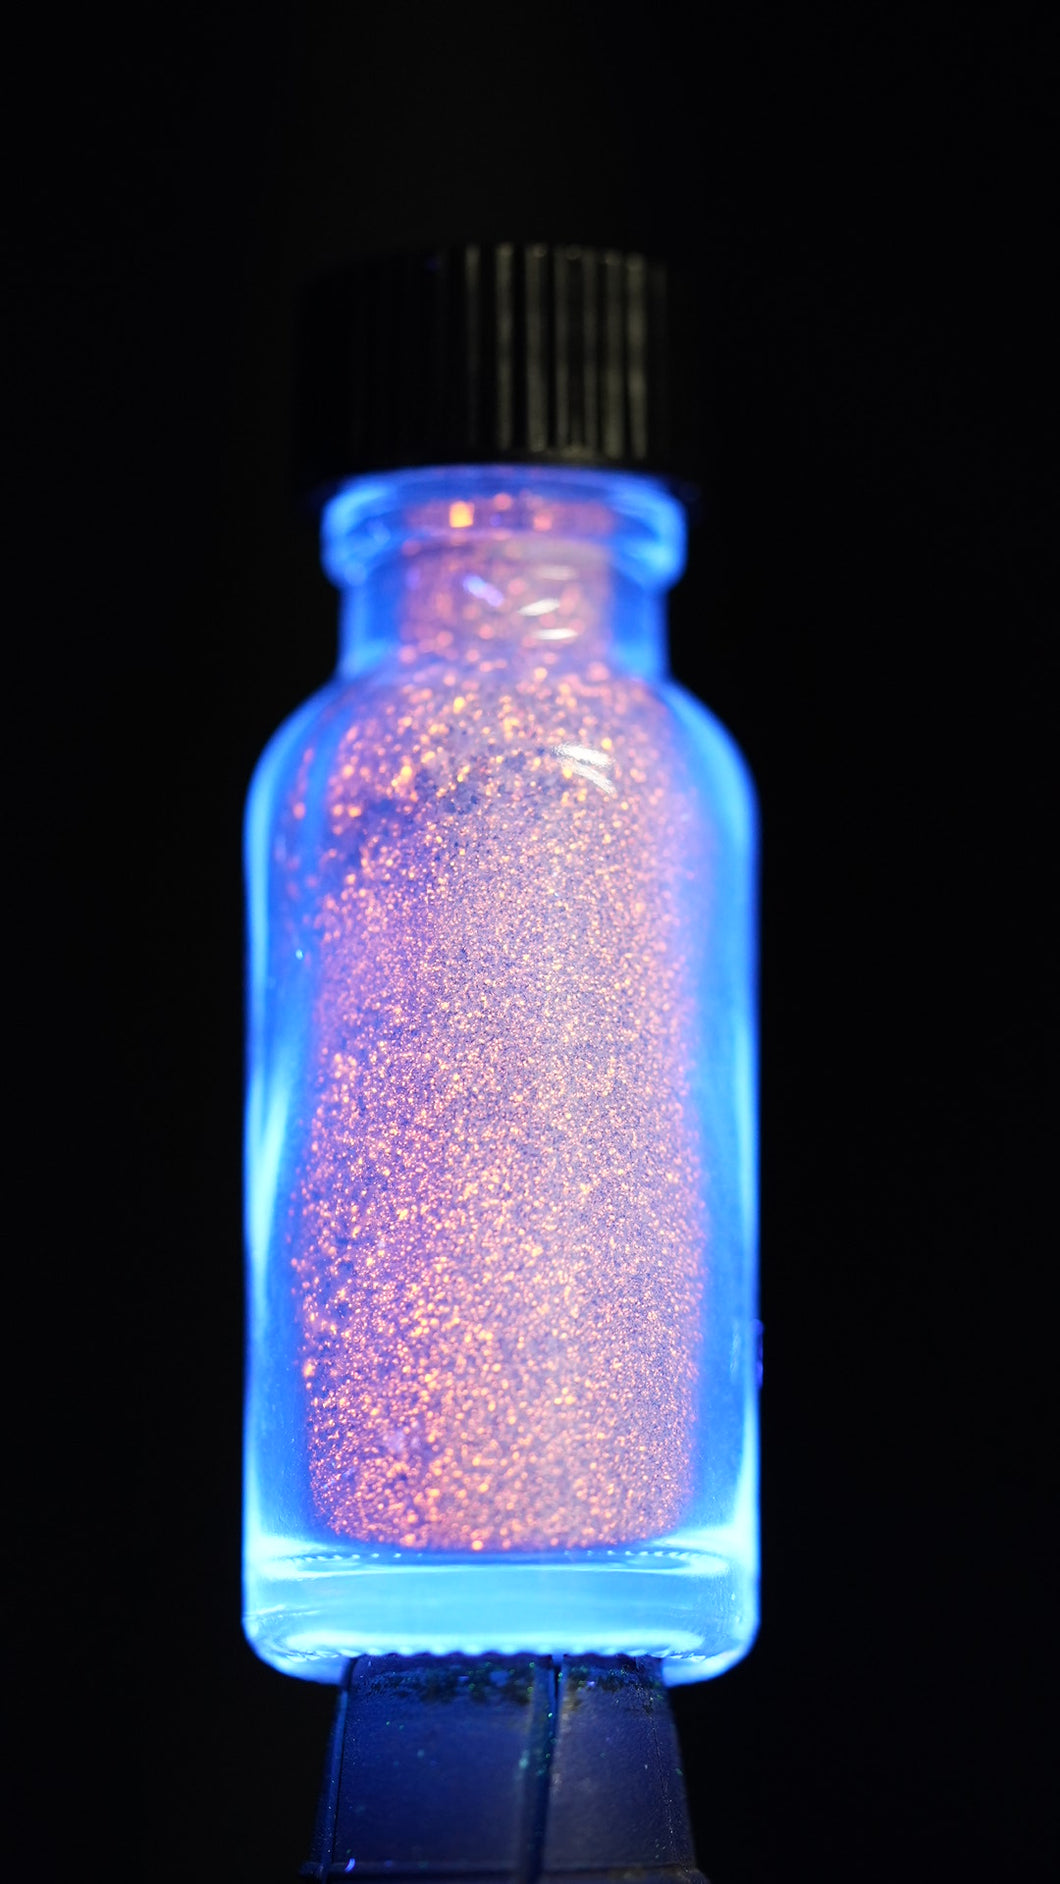 Small glass bottle of Yooperlite dust -1oz of dust - great for DIY